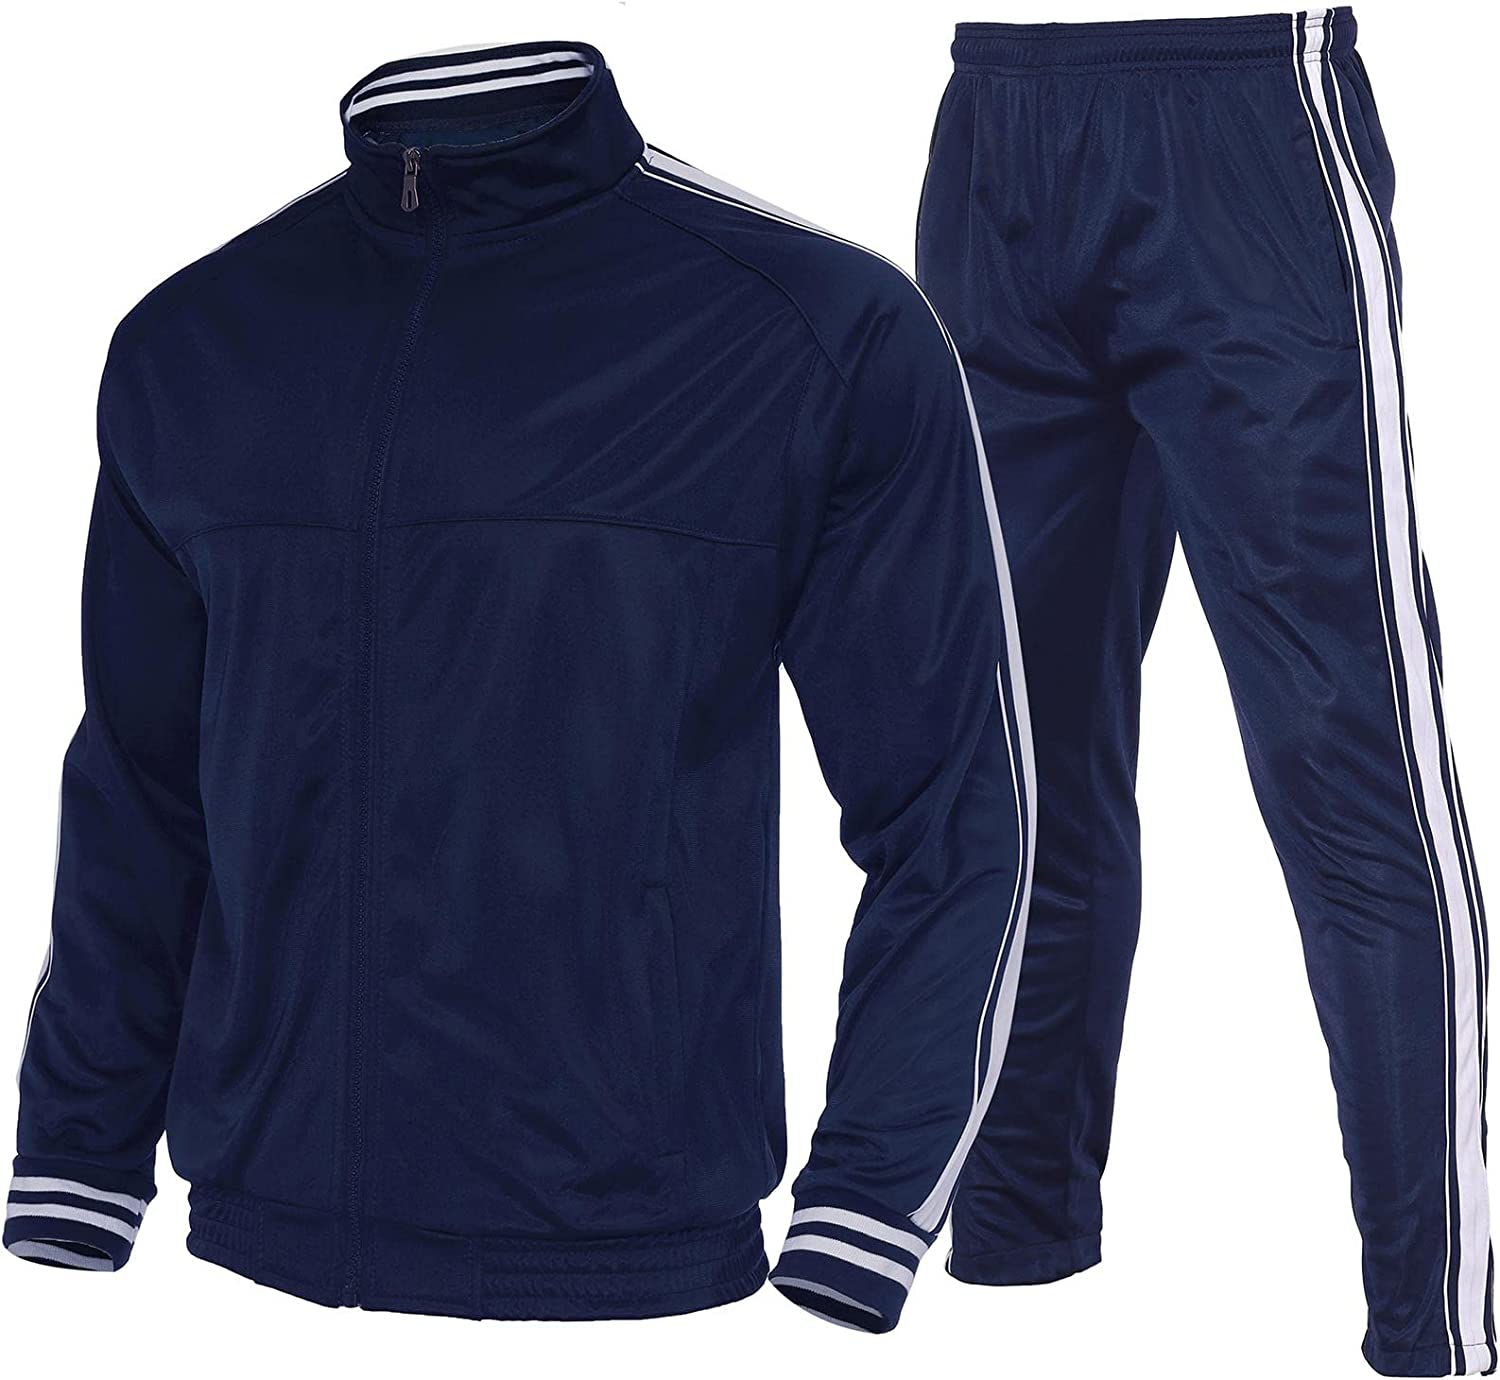 X-2 Men Track Suits 2 Pieces Set Full Zip Sweatsuit Men Hooded Tracksuit  Athletic Sports Set Teal Blue X-Large